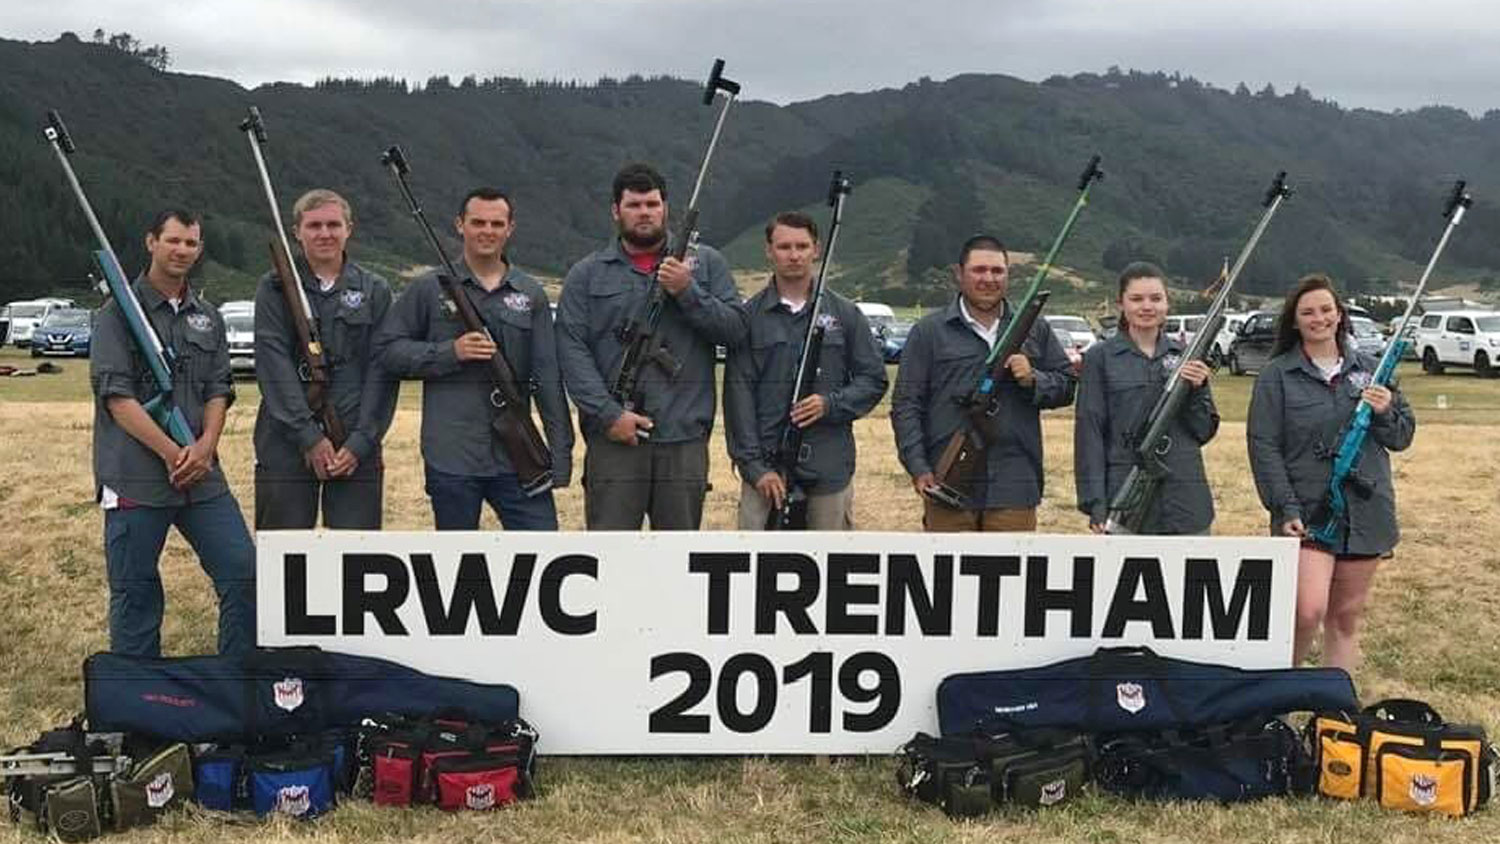 LWRC Trentham, New Zealand, Young Eagles Rifle Team